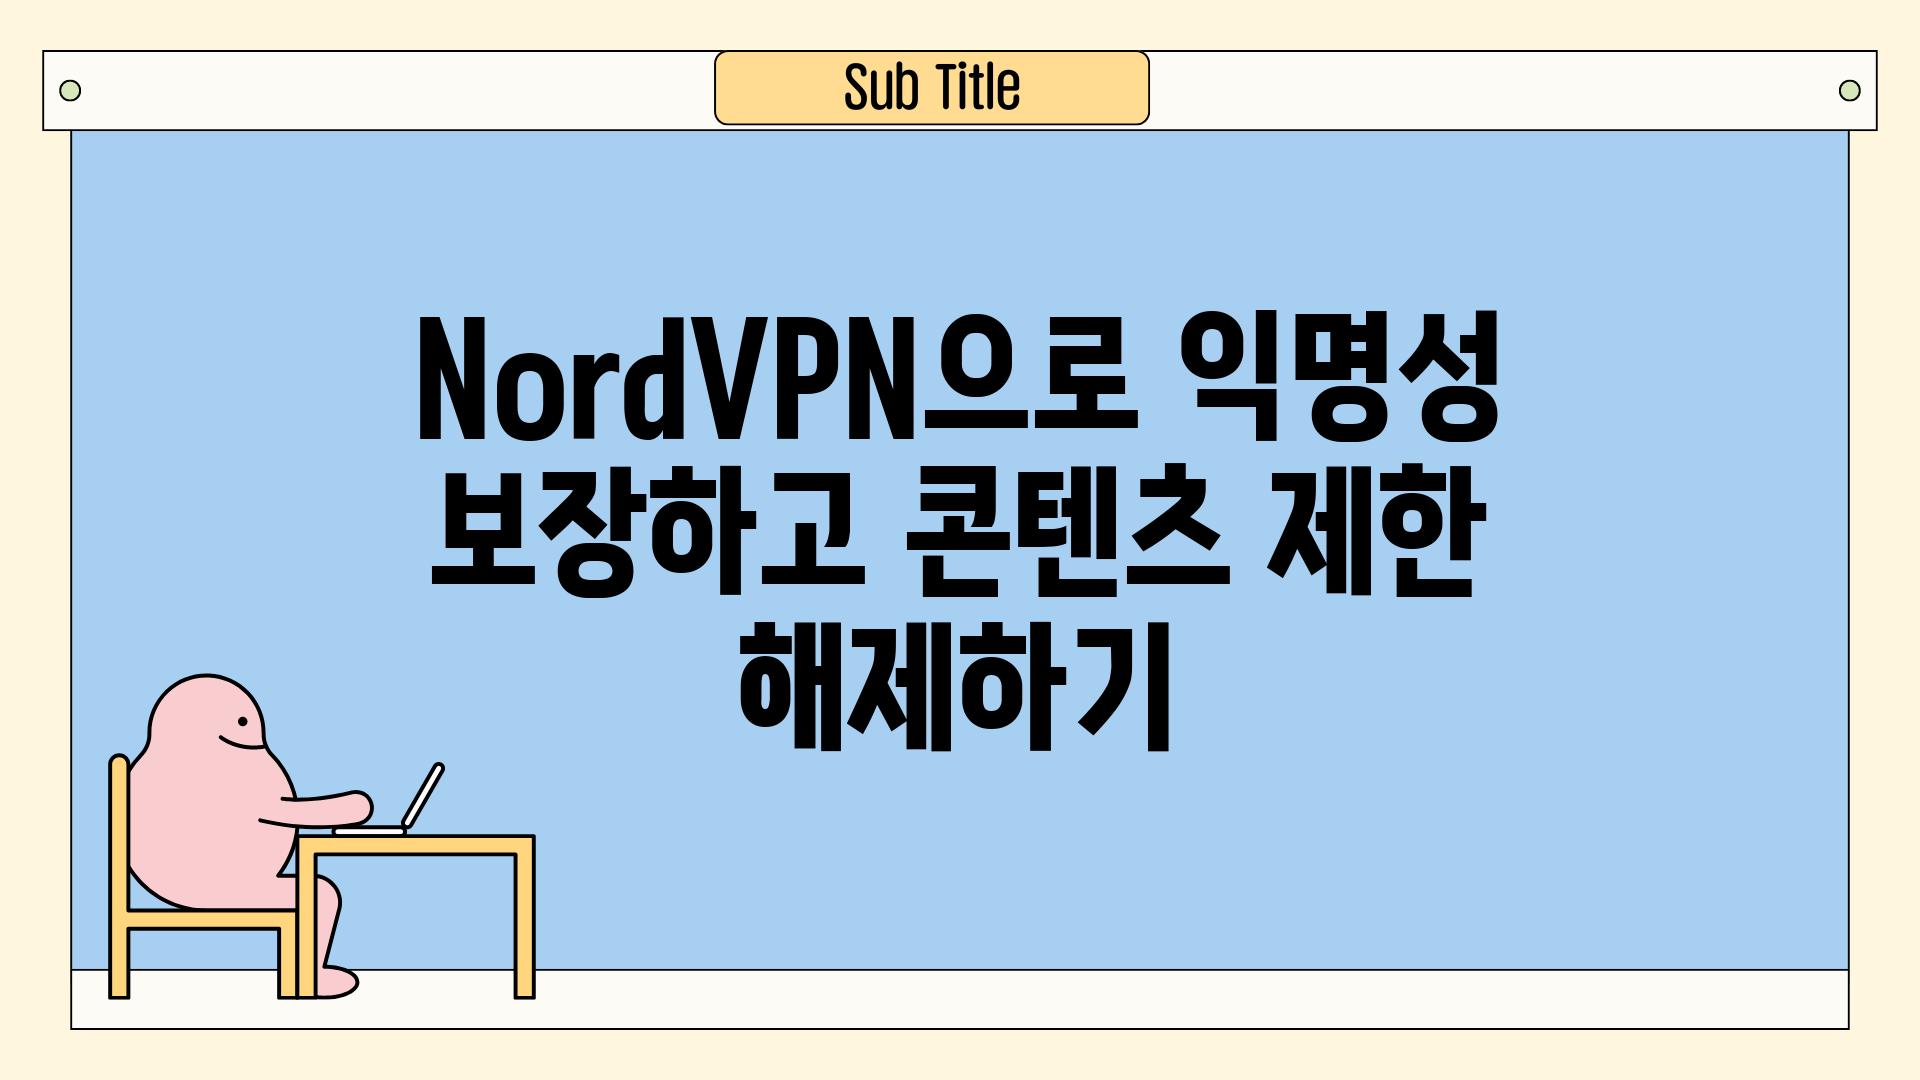 NordVPN으로 익명성 보장하고 콘텐츠 제한 해제하기